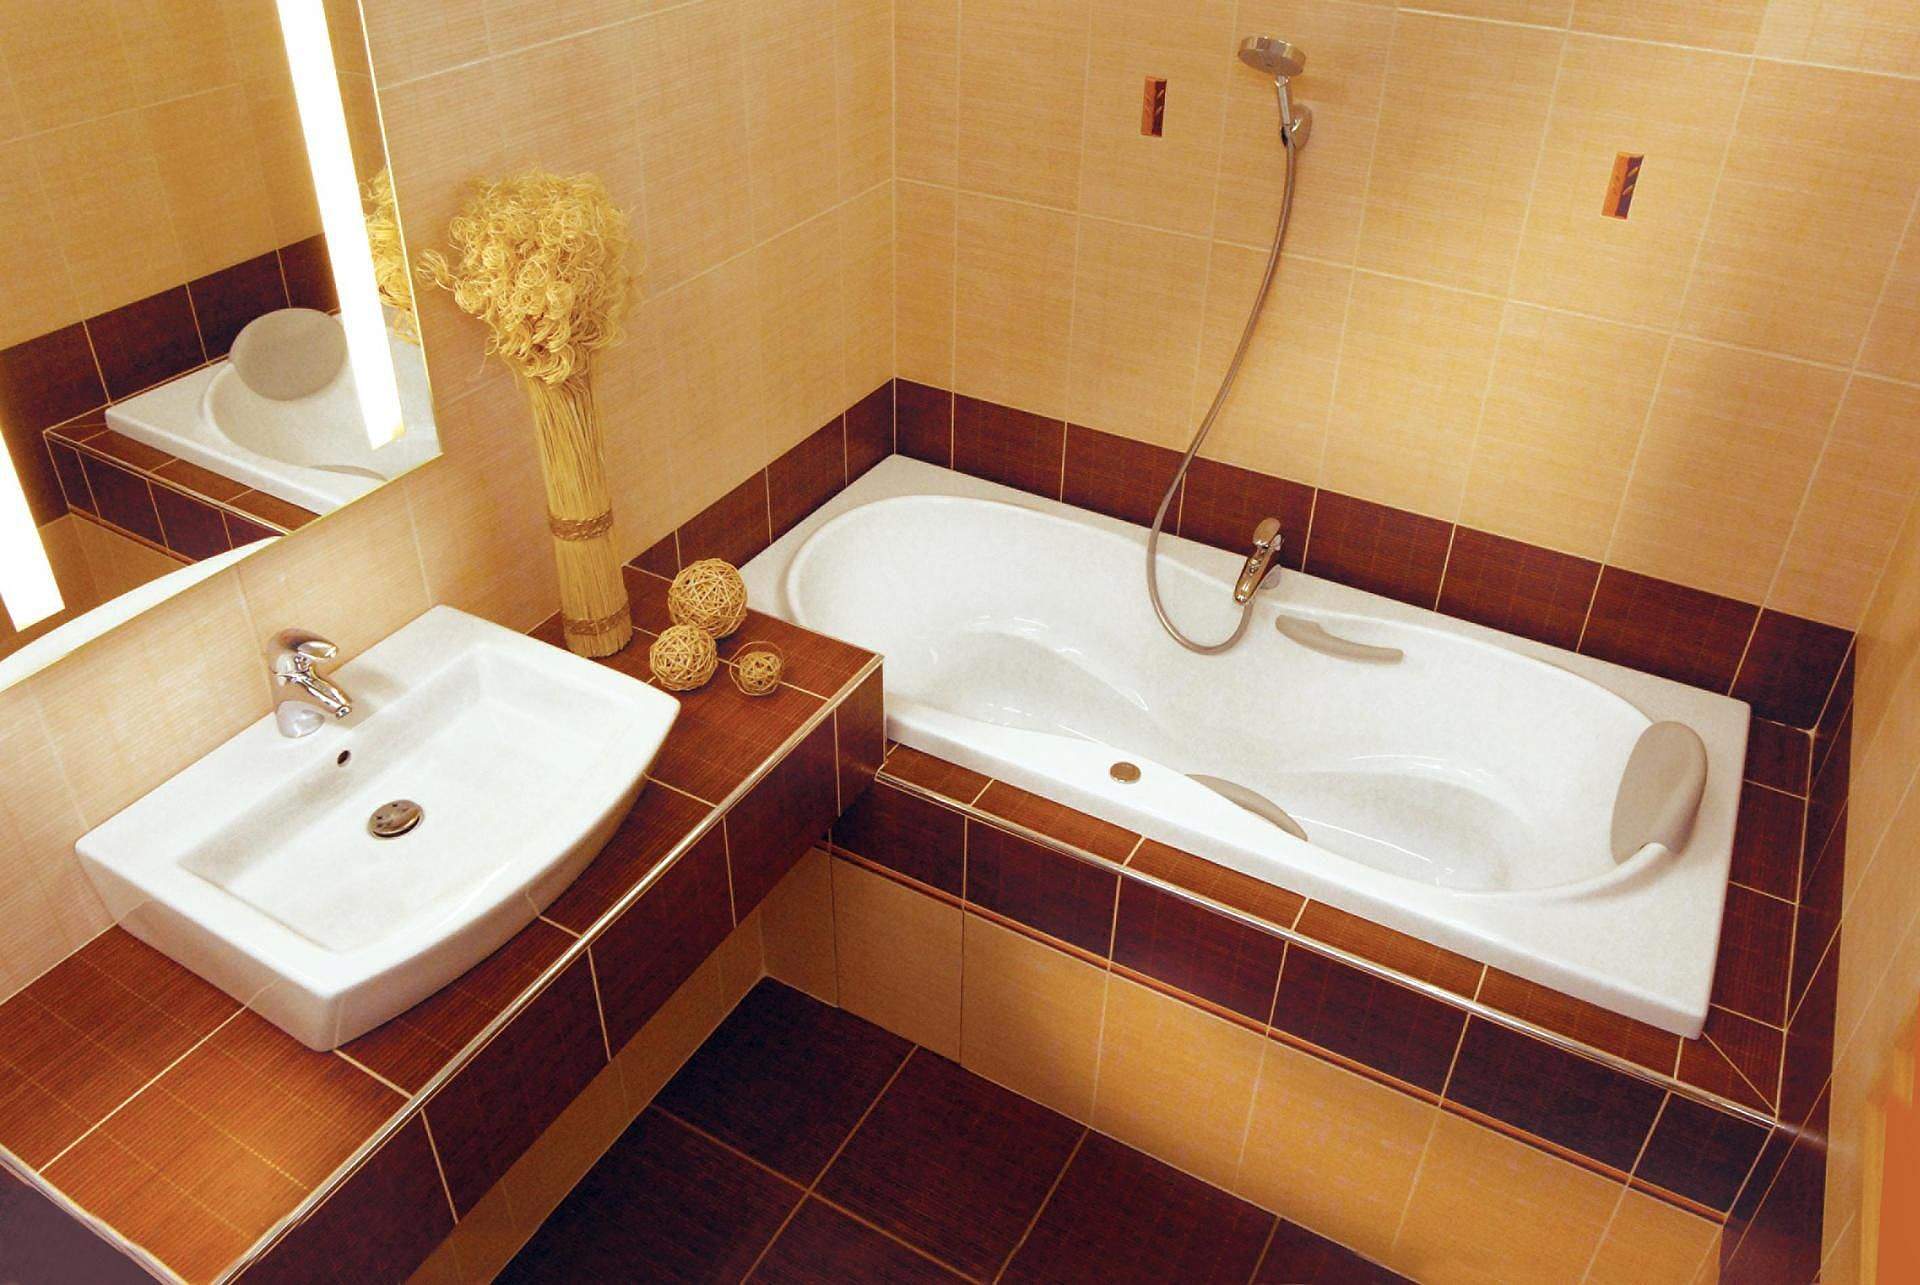 Ванная комната дешево и красиво дизайн